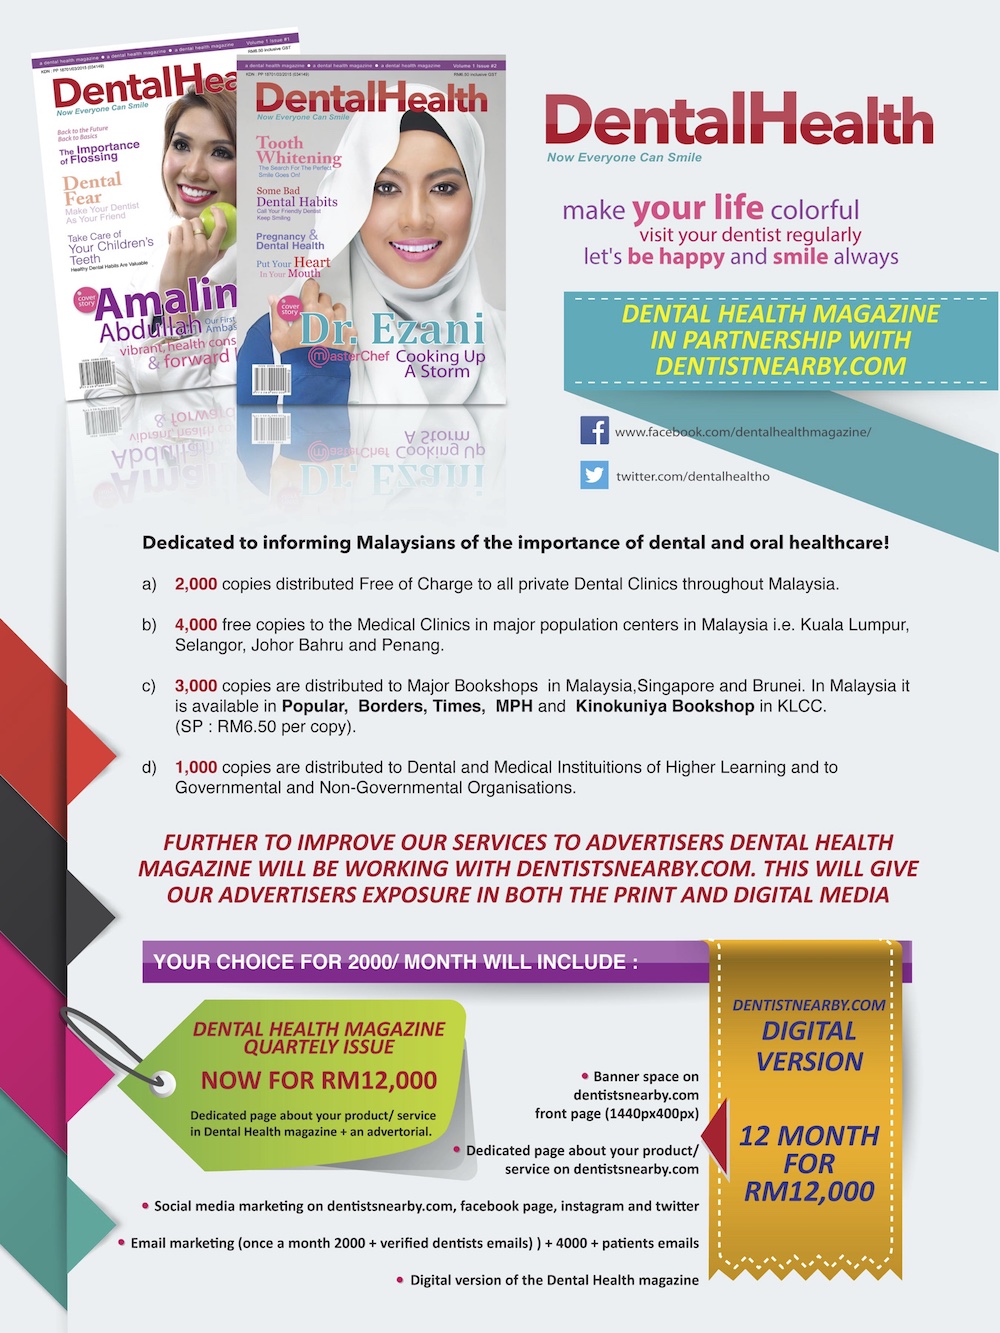 dental-health-magazine-media-kit-1